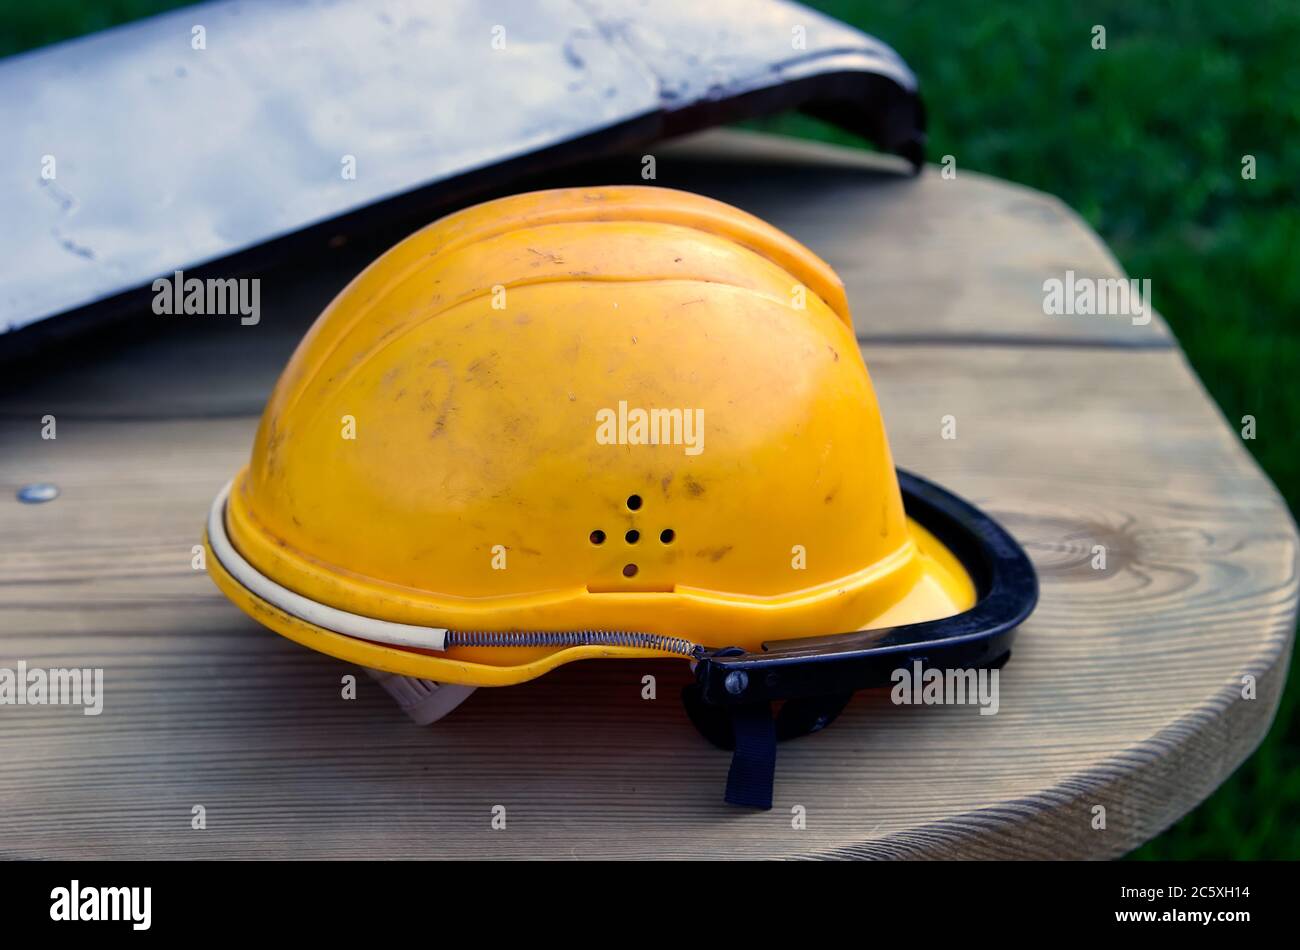 Dirty orange workman's safety helmet (hard hat) on wooden table Stock Photo